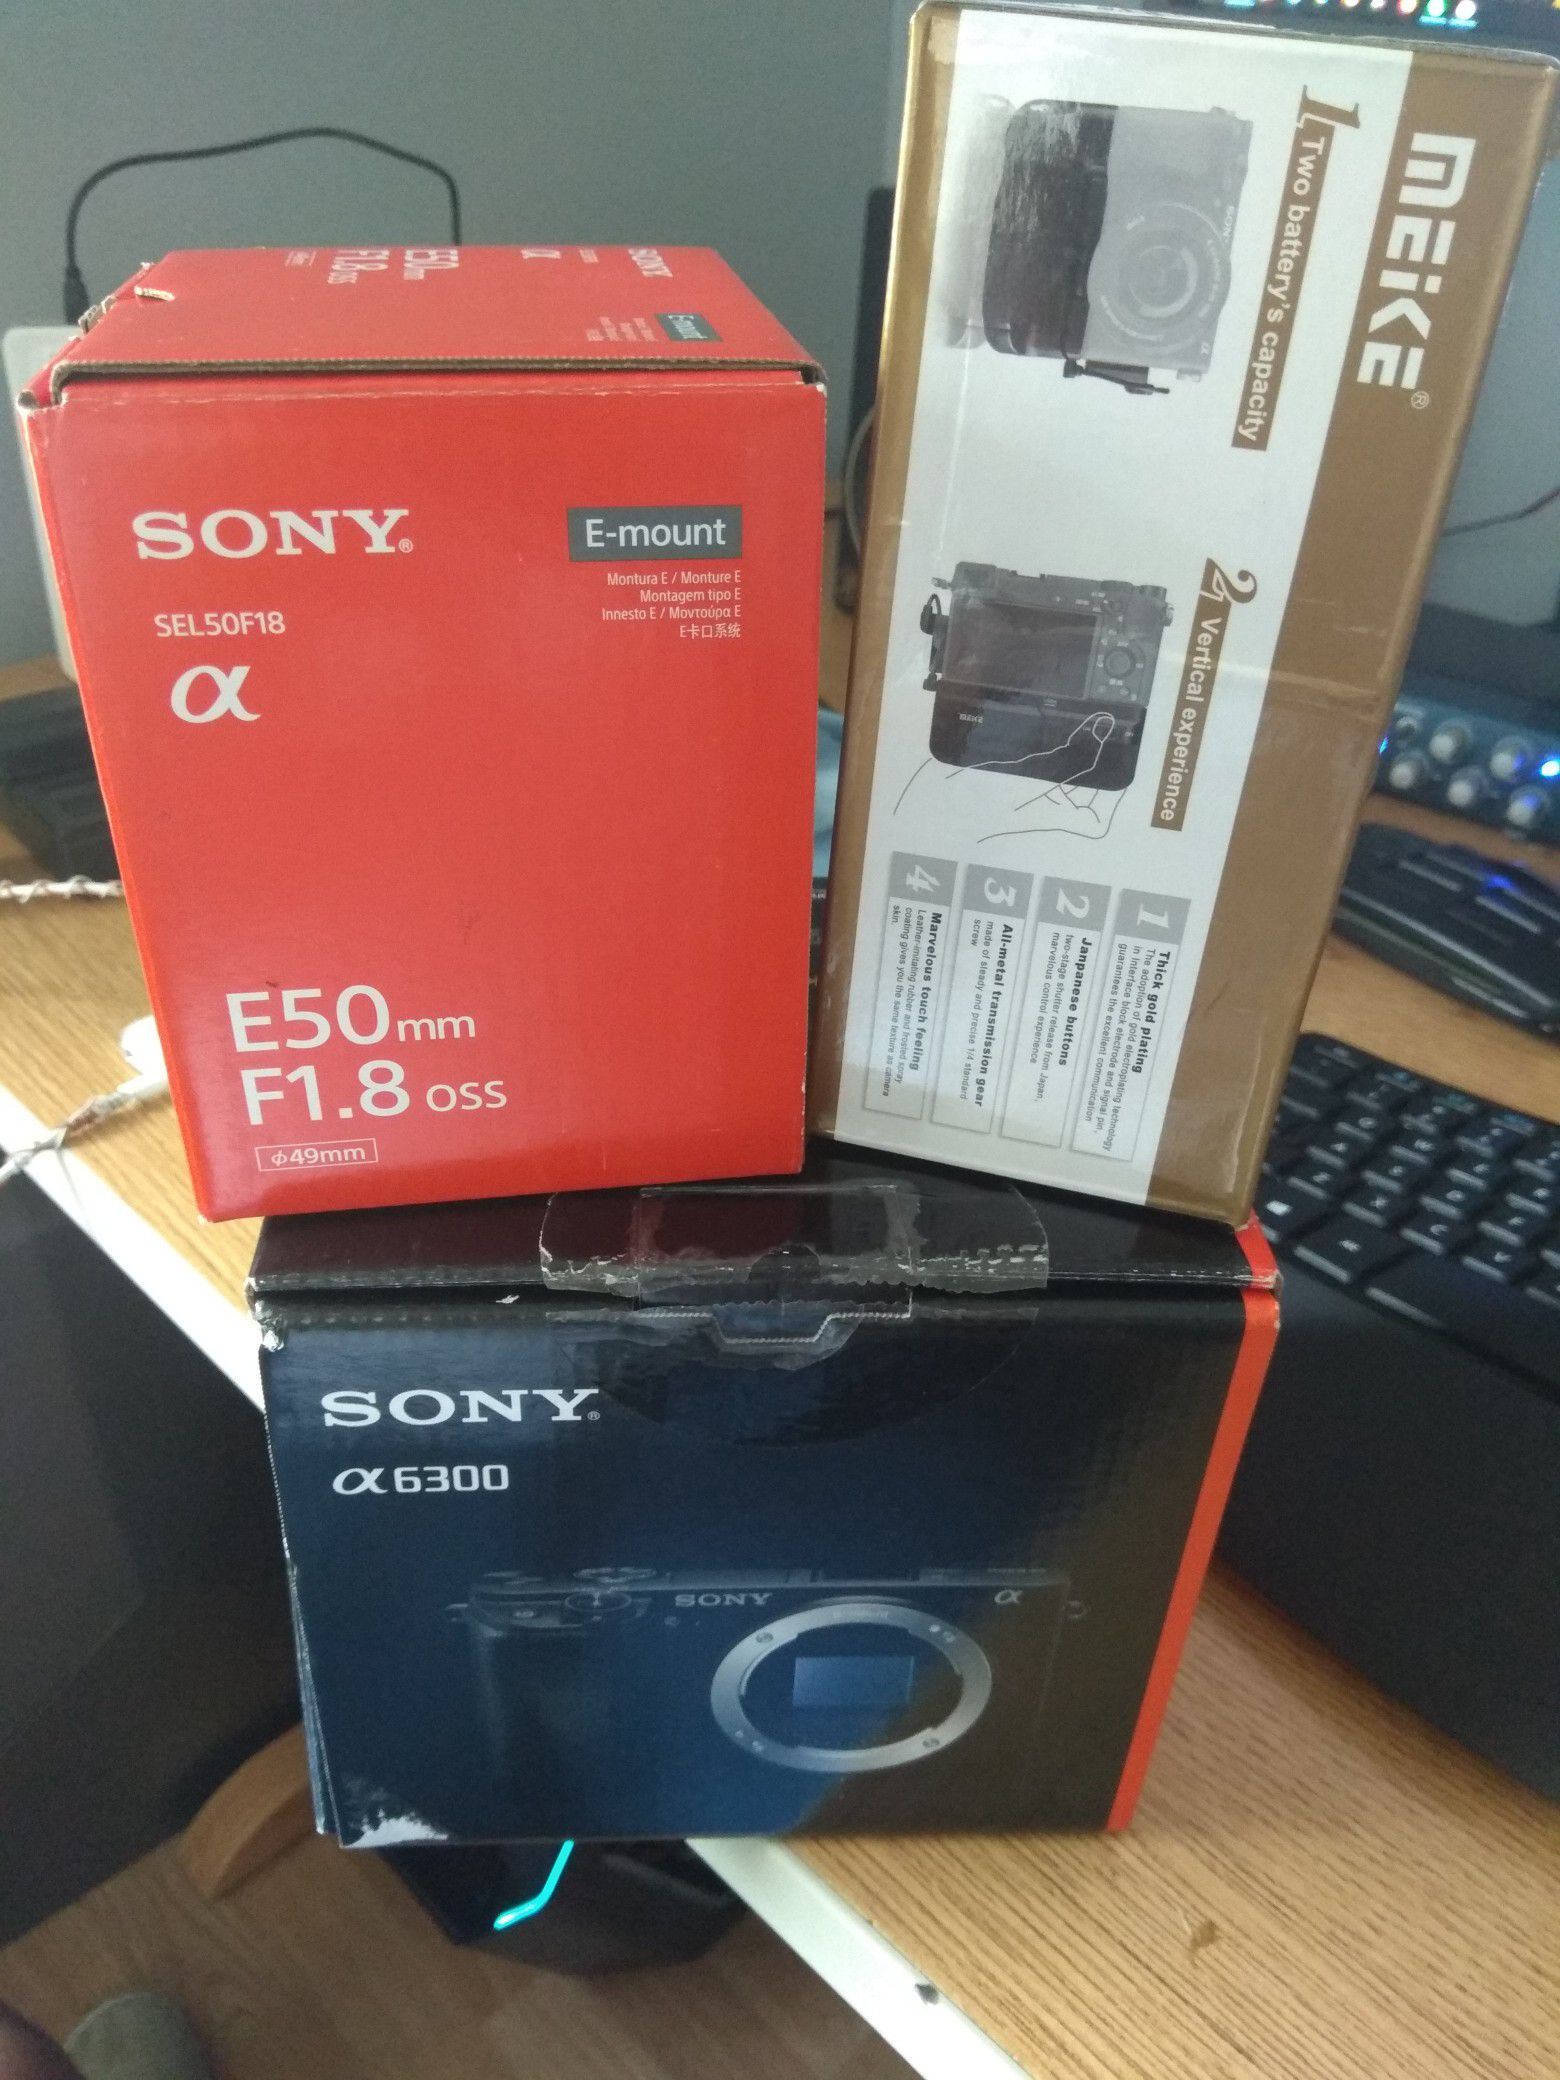 Sony kit